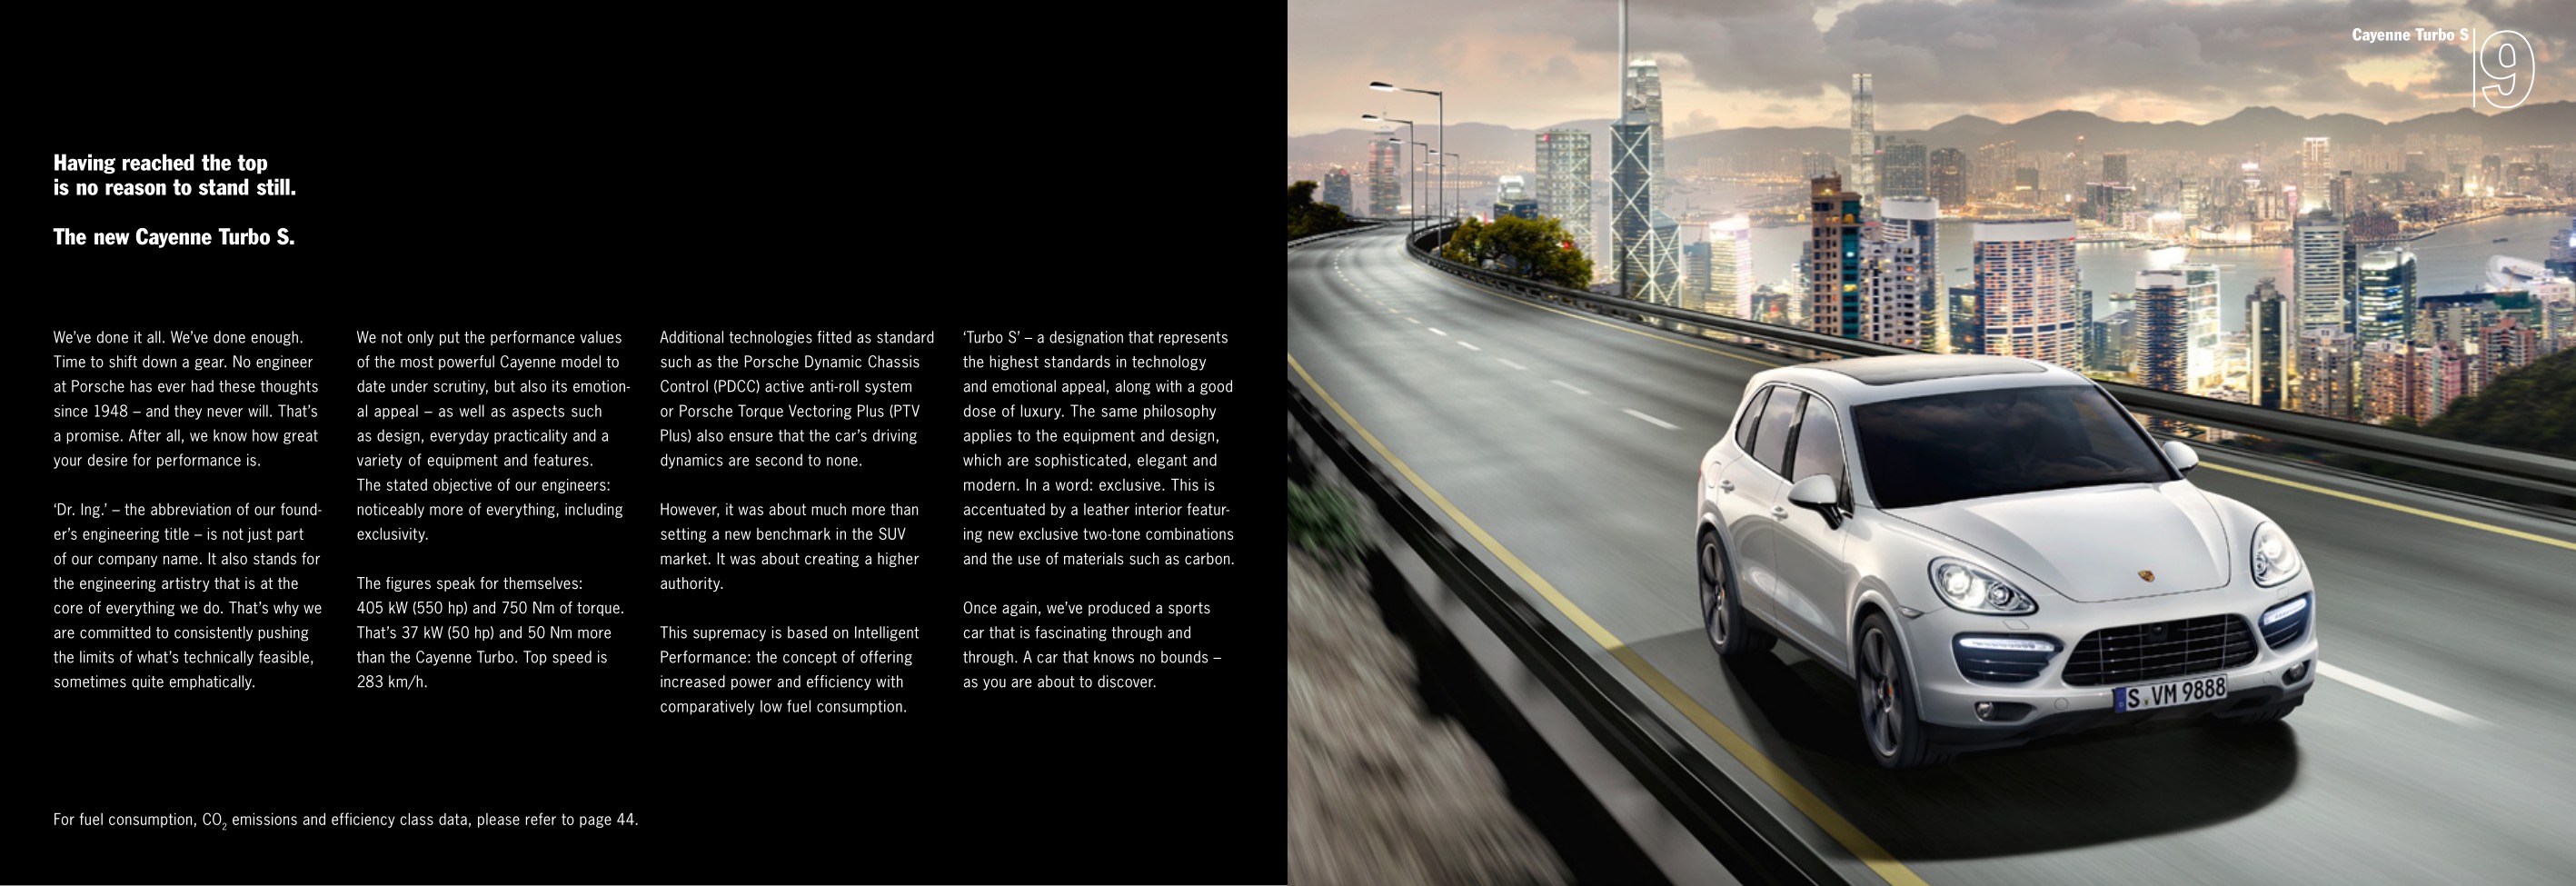 2013 Porsche Cayenne Turbo Brochure Page 9